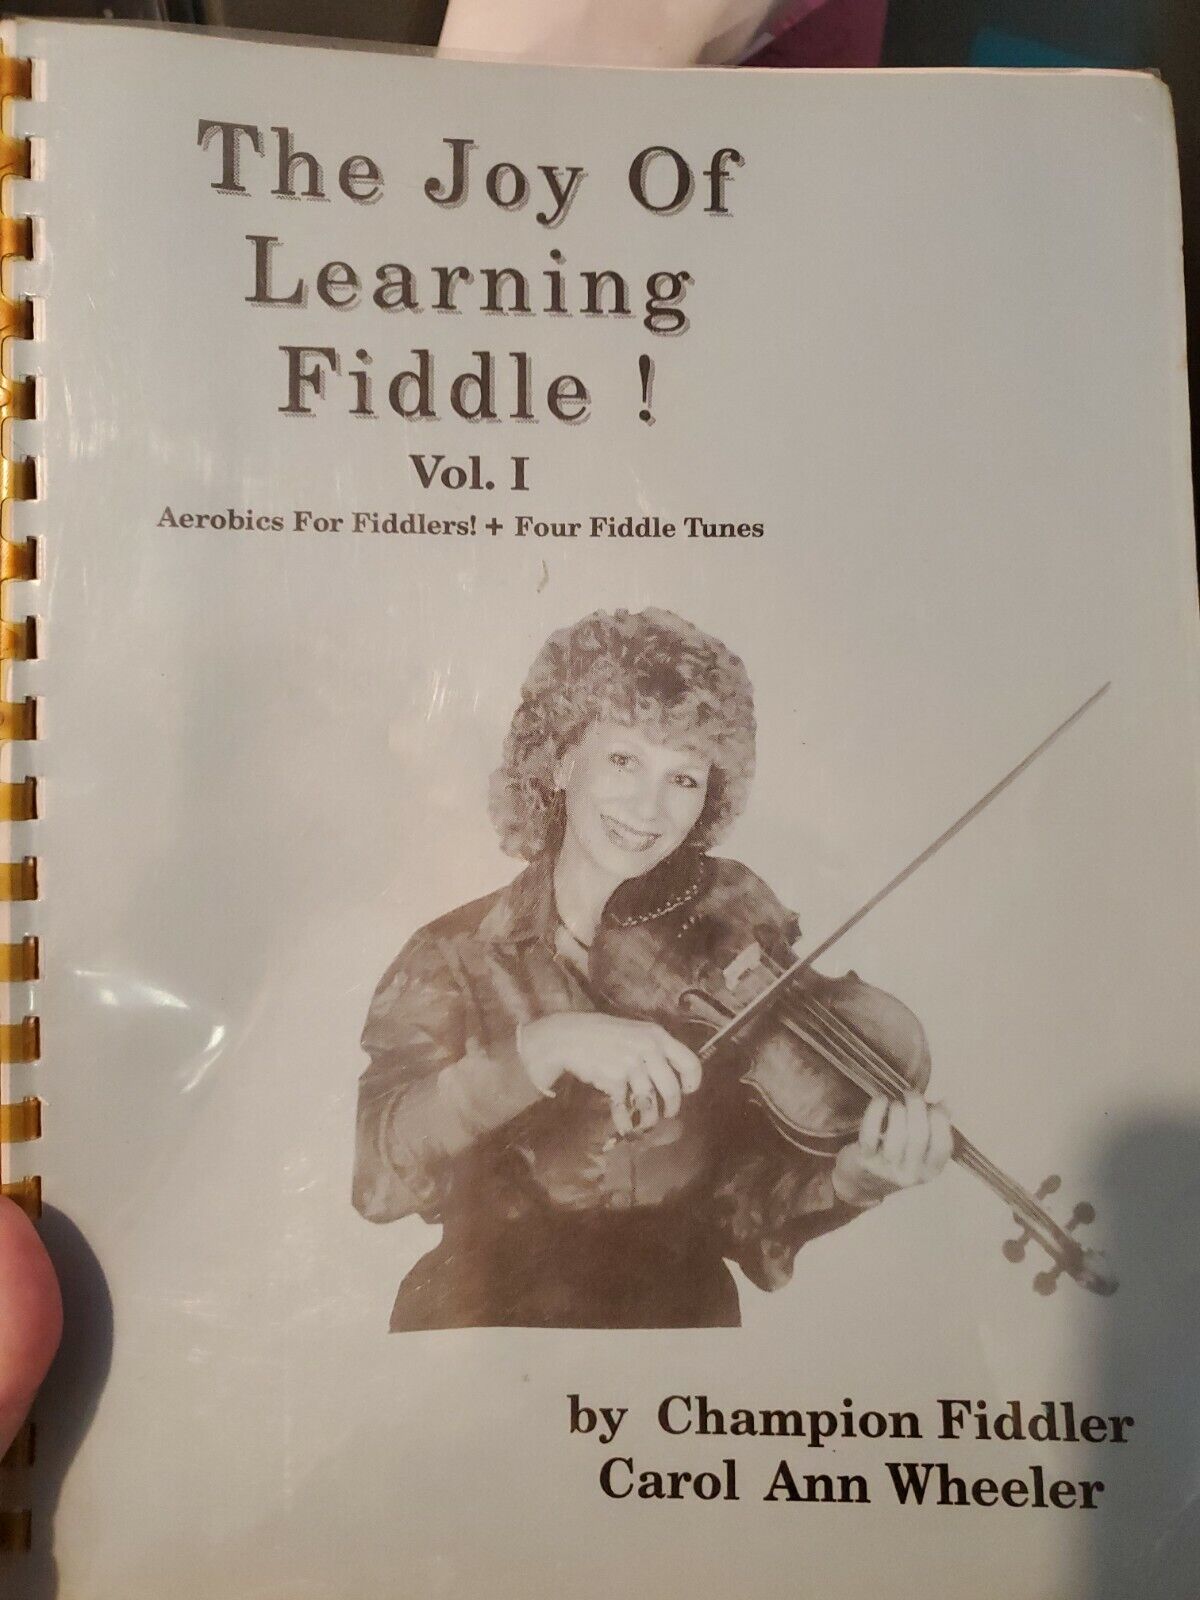 The Joy Of Learning The Fiddle Vol. 1 Carol Ann Wheeler